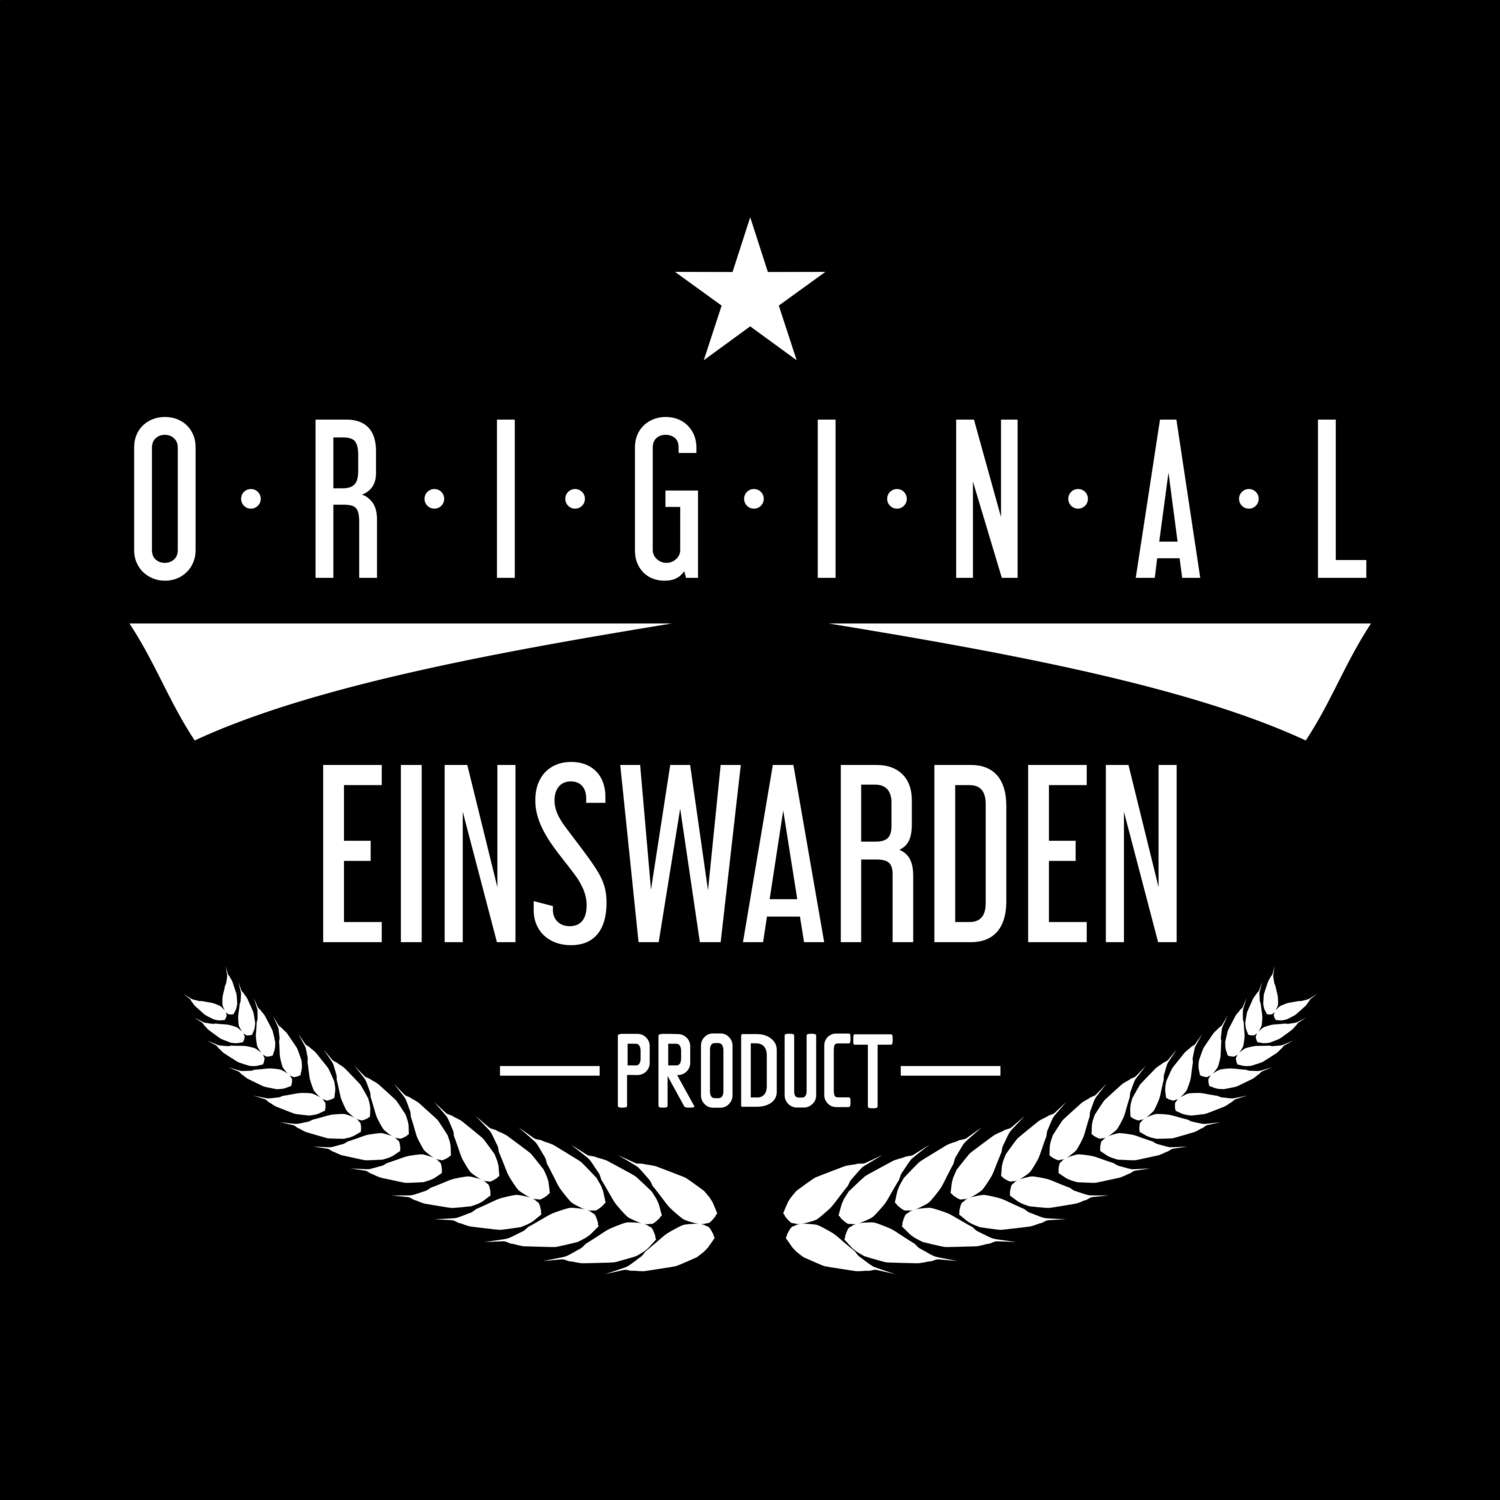 Einswarden T-Shirt »Original Product«